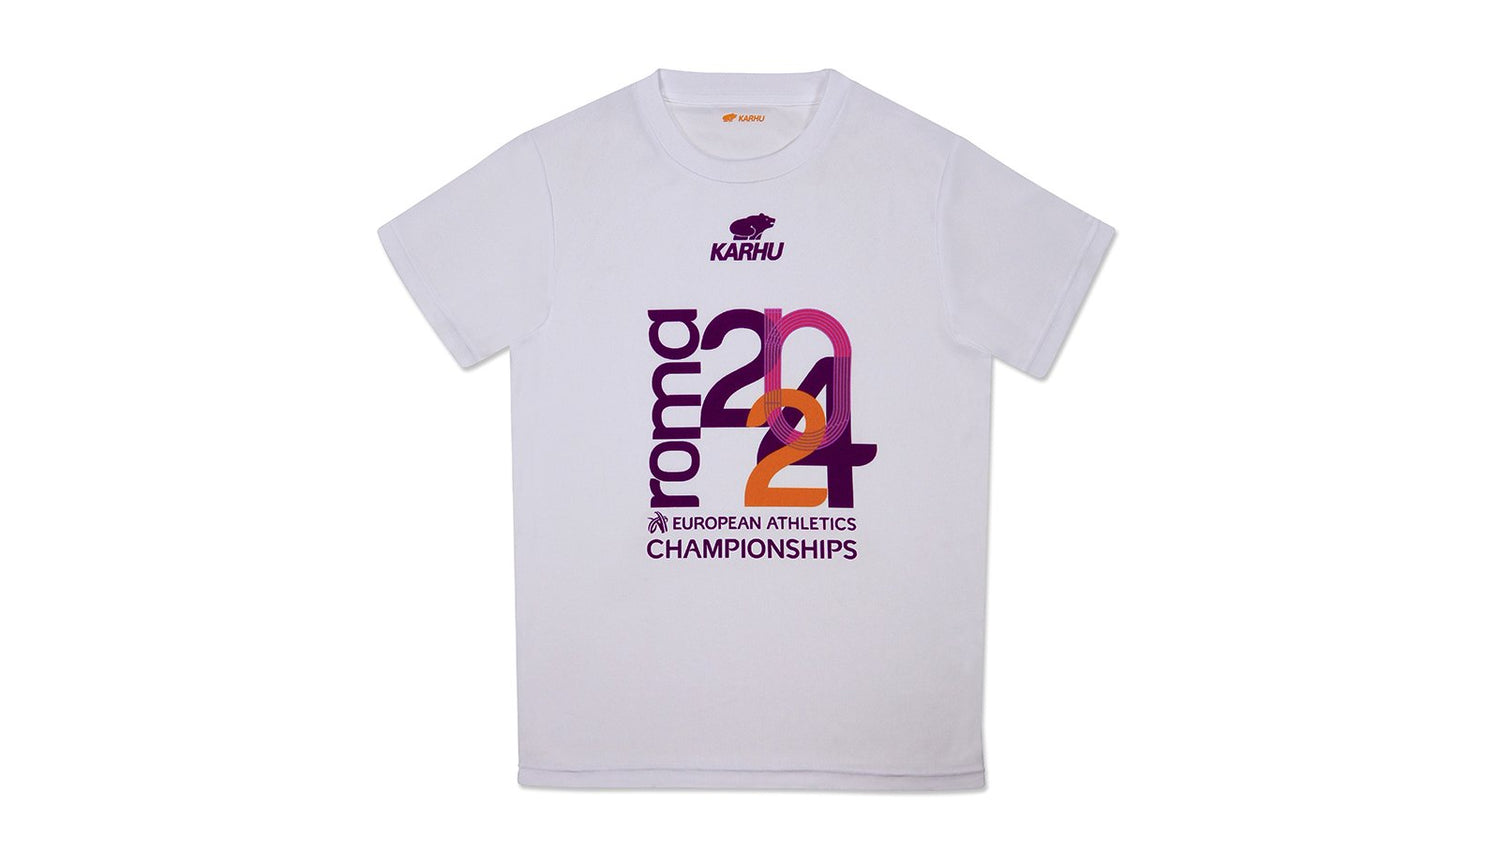 KARHU x European Athletics performance t-shirt